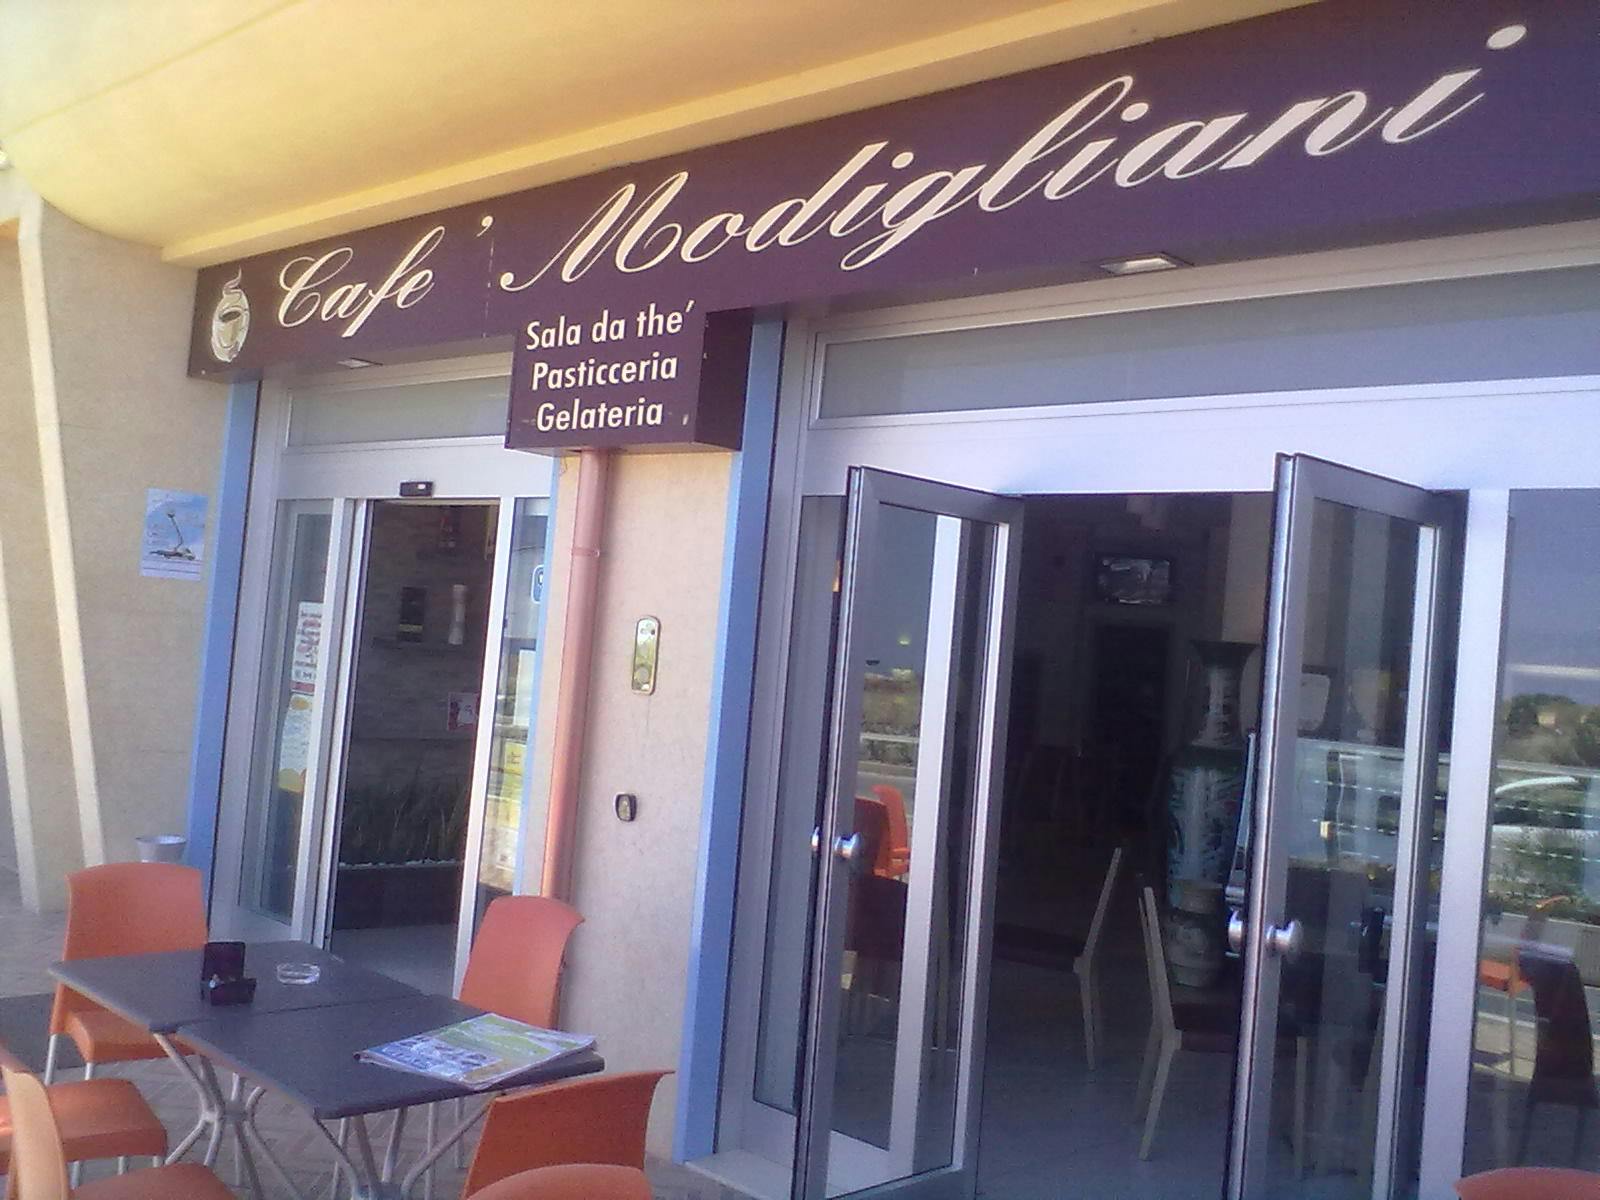 Image - Modigliani Cafe Pasticceria